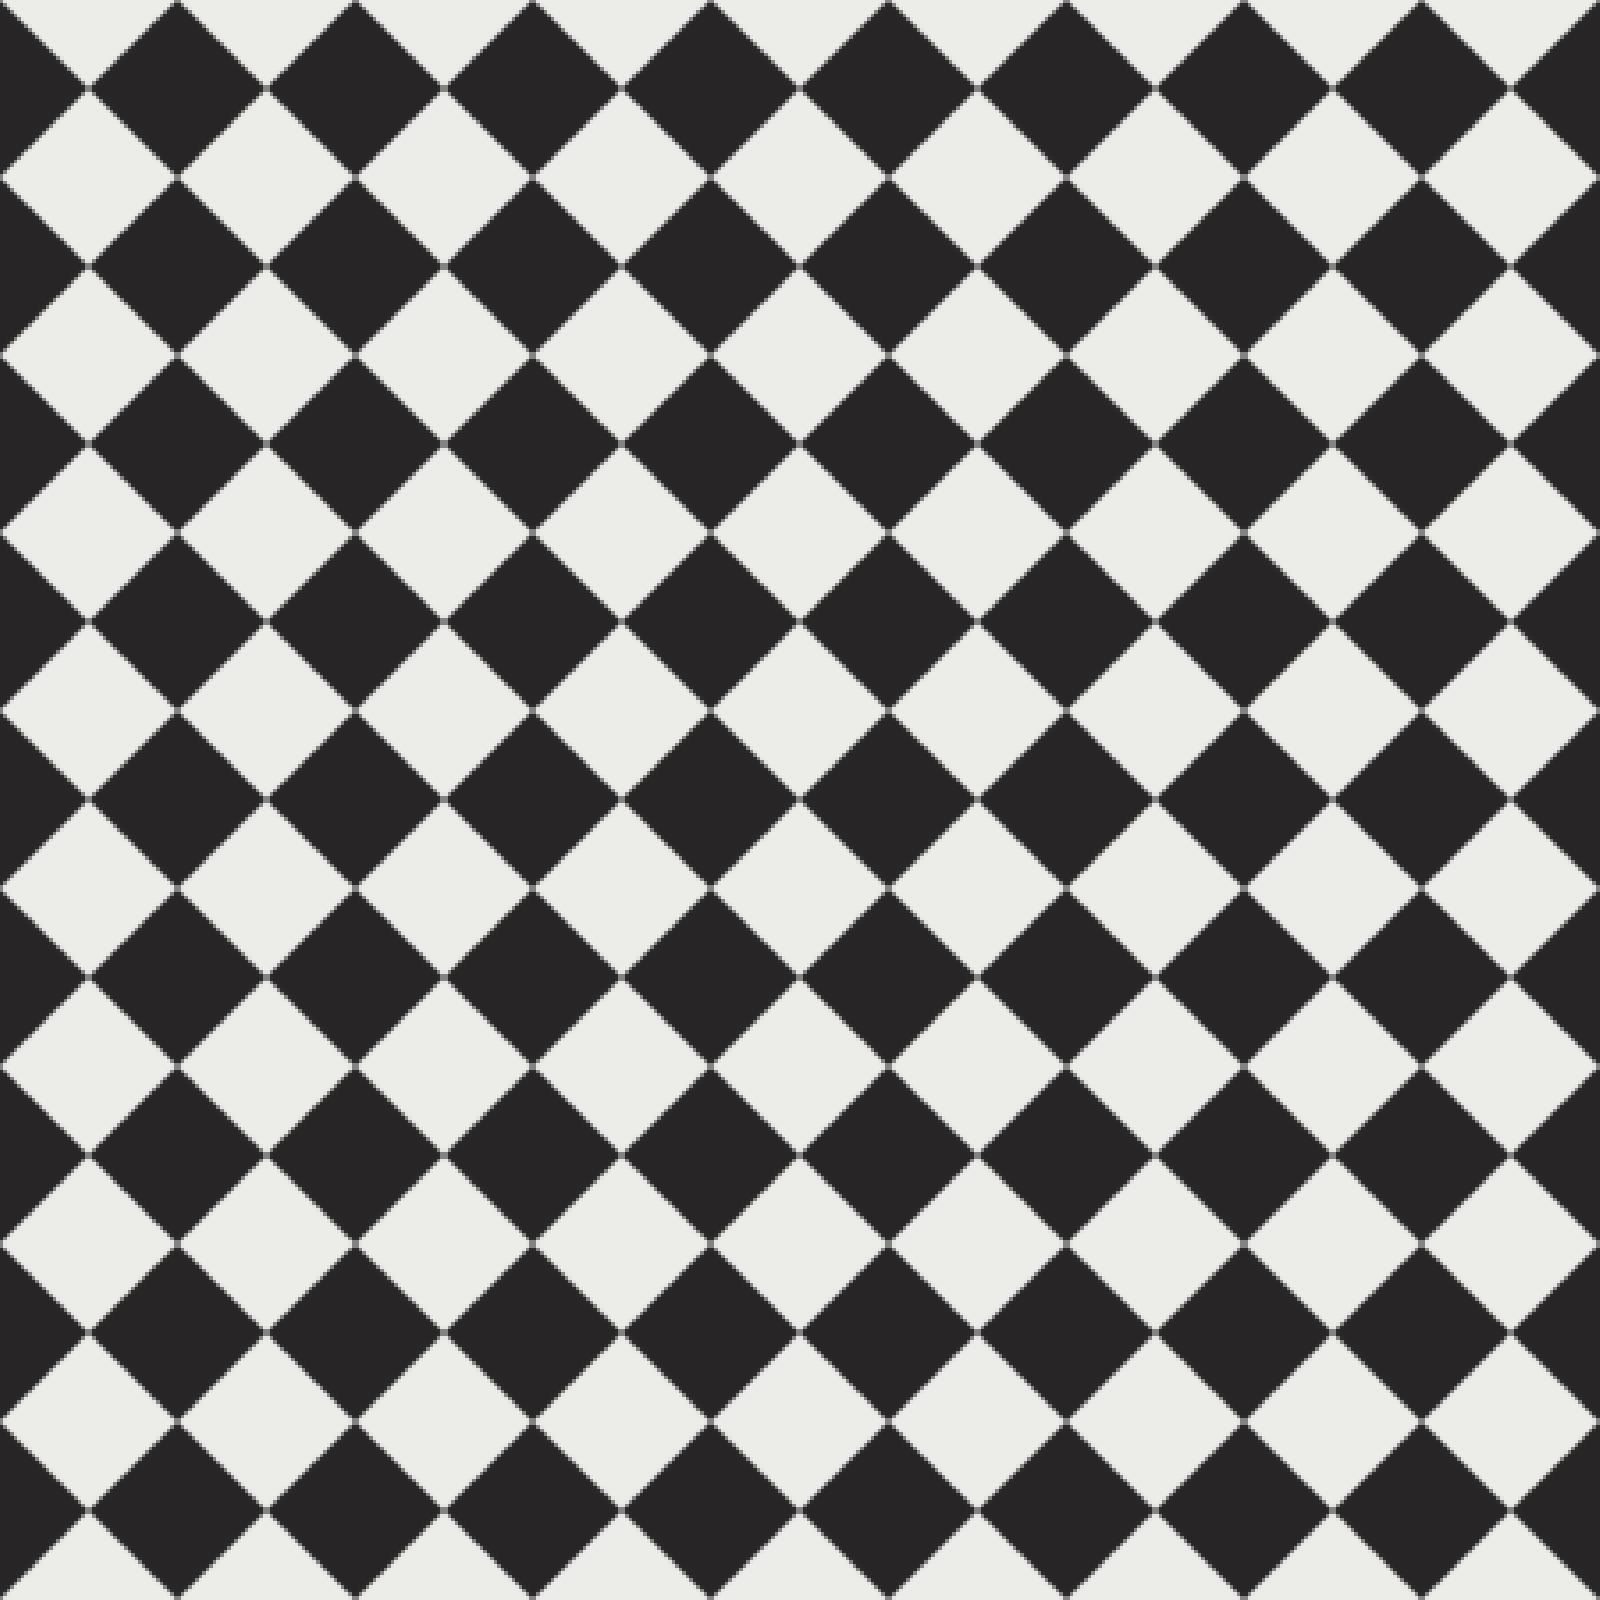 Geometric Floor Tiles - 10x10cm Squares - Per Sqm (to match border designs)